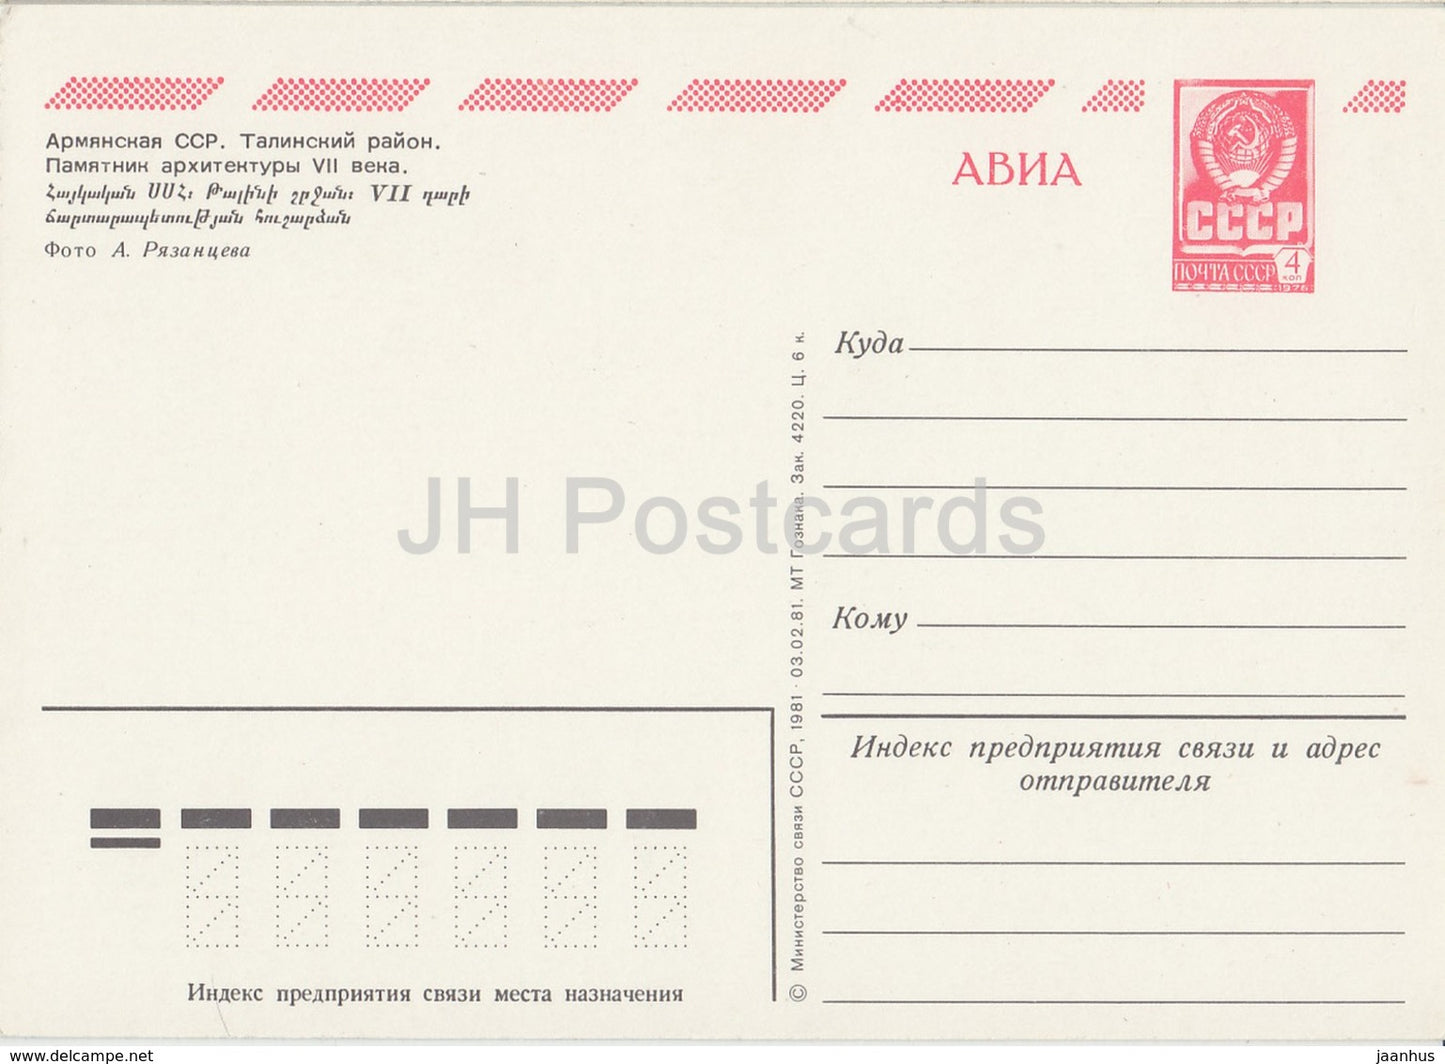 Talin Region - Architectural monument - AVIA - postal stationery - 1981 - Armenia USSR -  unused